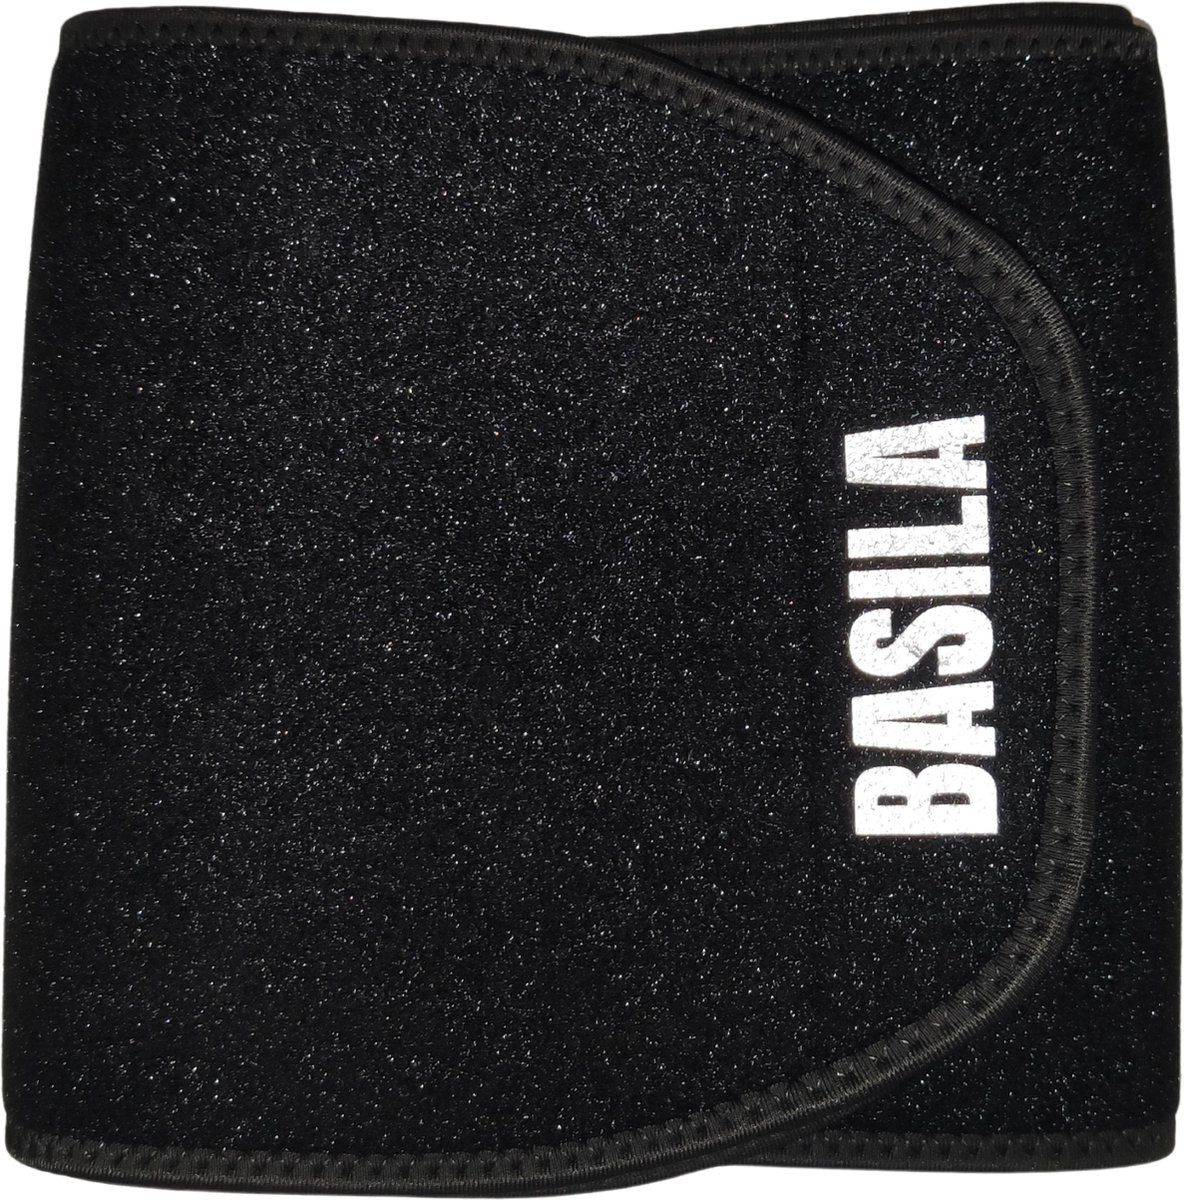 Basila® Waist Trainer - Silver Ion - One Size - 110cm - Sauna Band - Zweetband Buik - Afslankband Buik